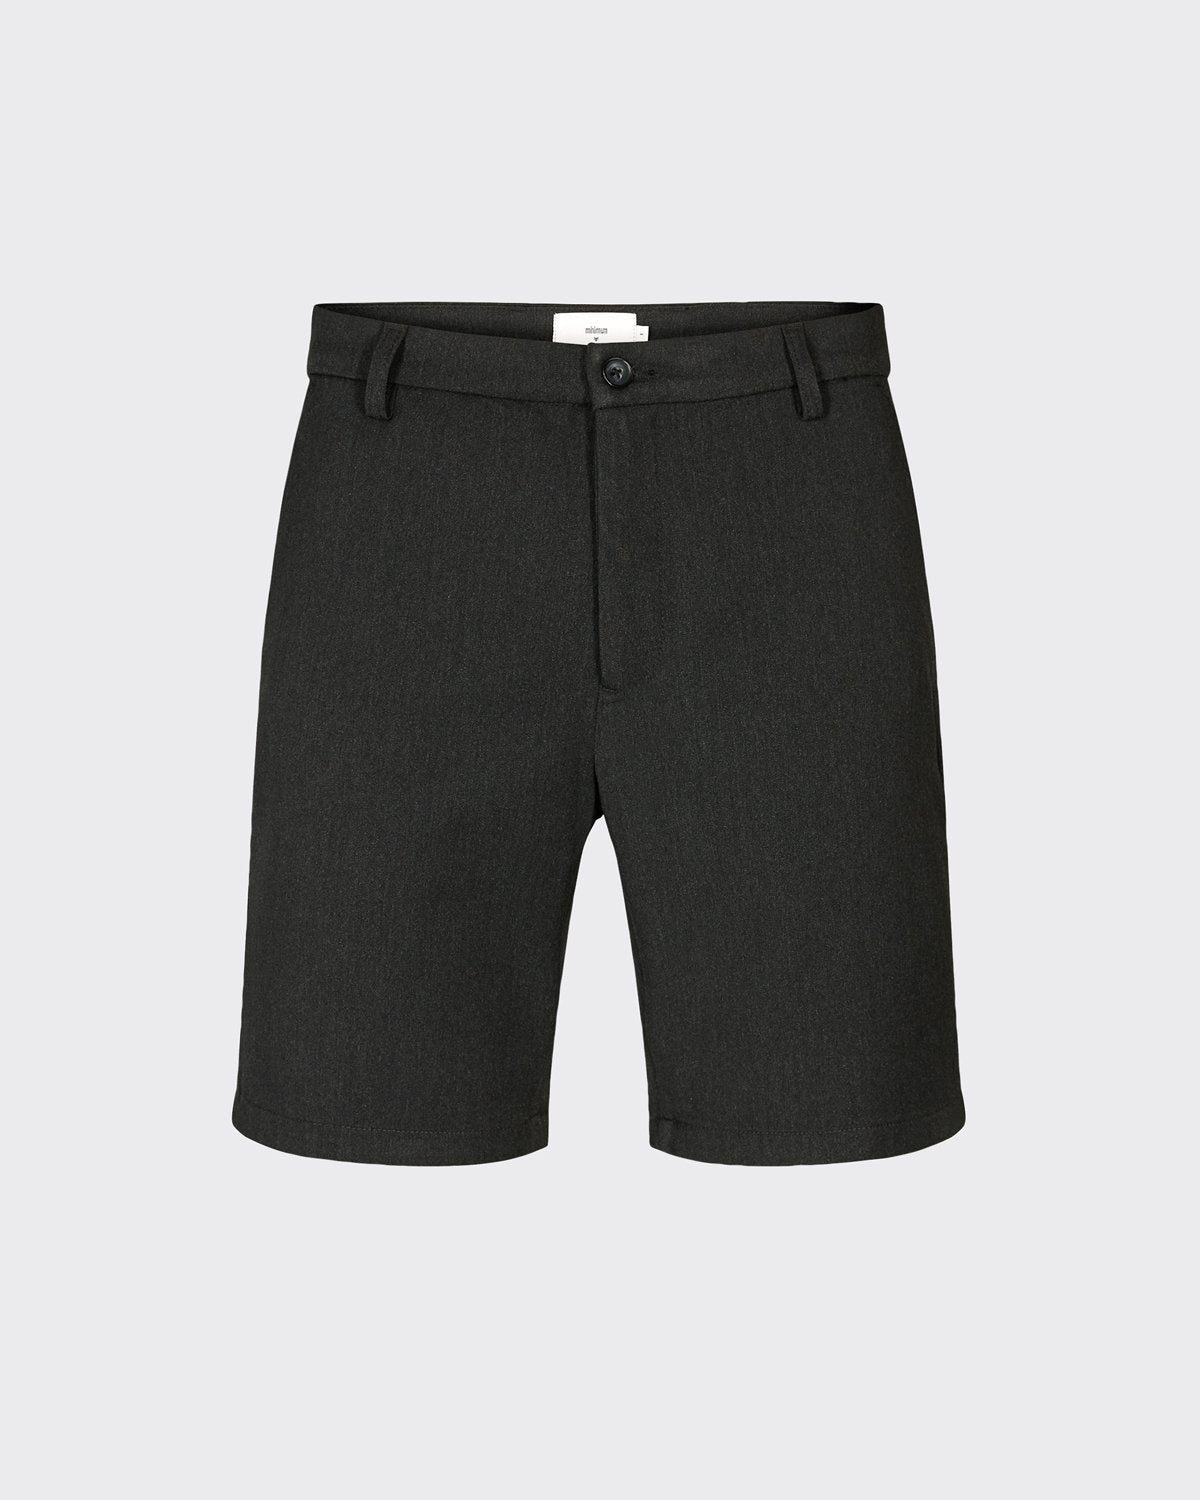 Ceasar 6395 Shorts